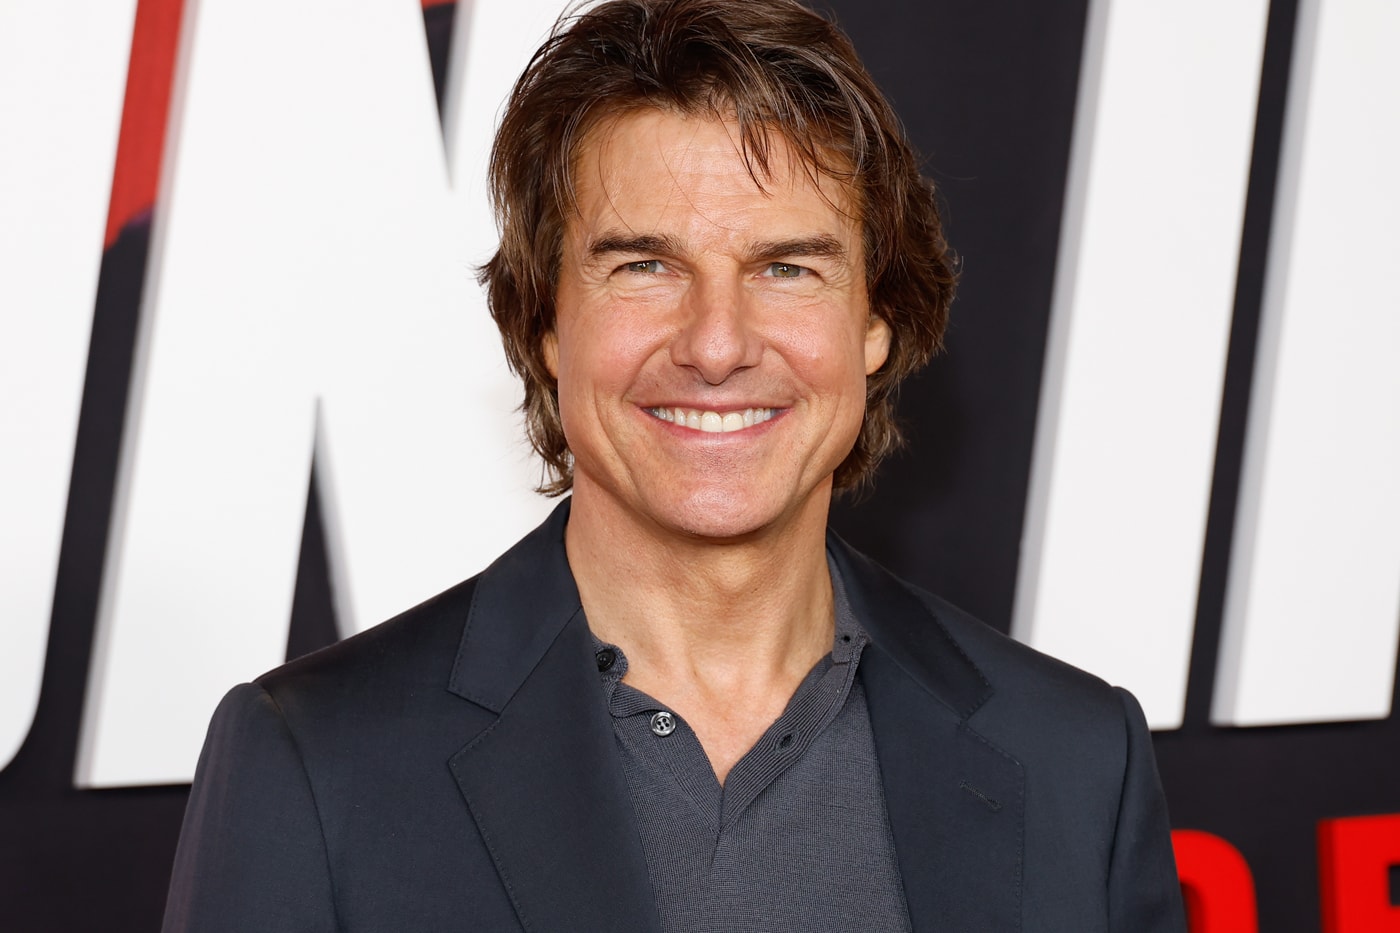 Tom Cruise Lands New Partnership Deal With Warner Bros. develop produce original franchise films strategic movie sign deal